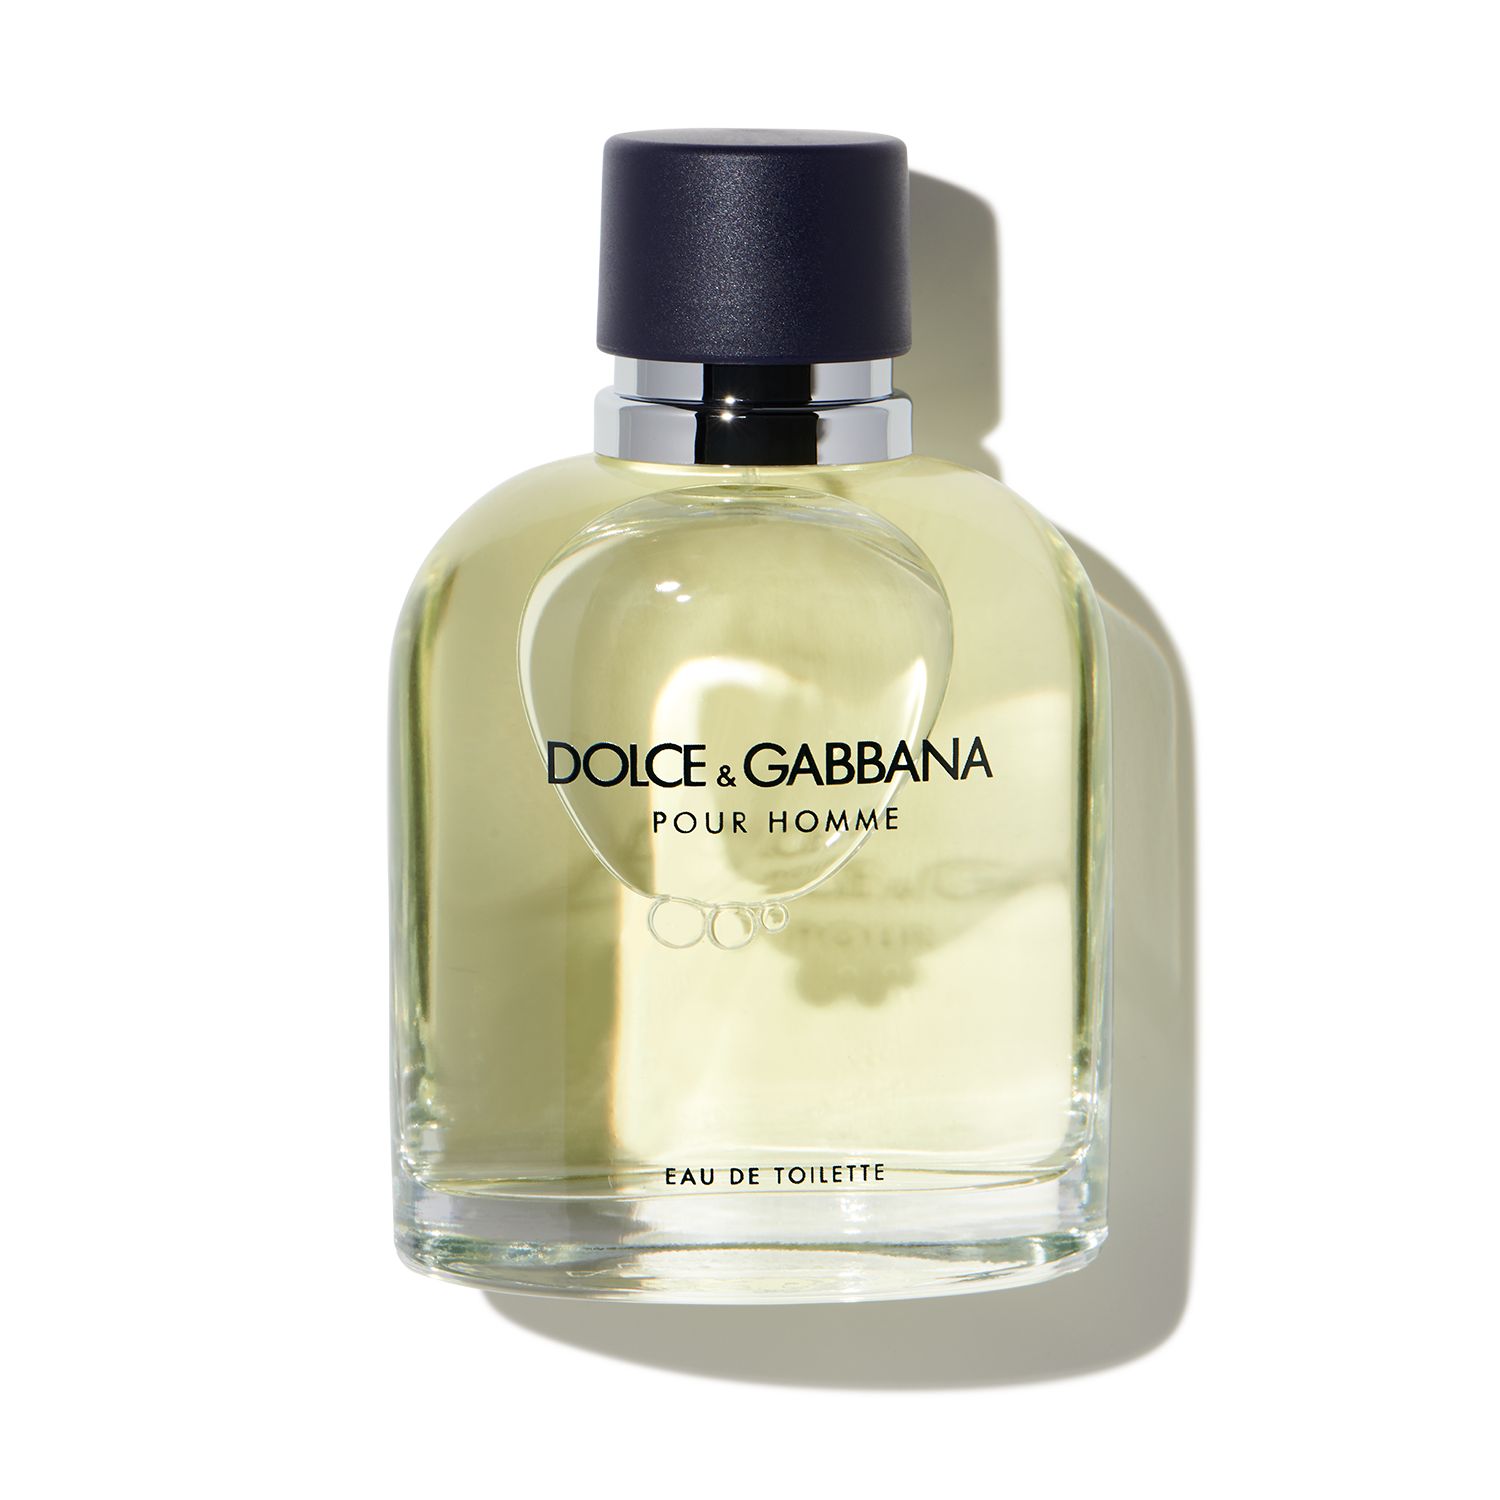 Dolce & Gabbana Pour Homme EDT by Dolce & Gabbana $/month | Scentbird